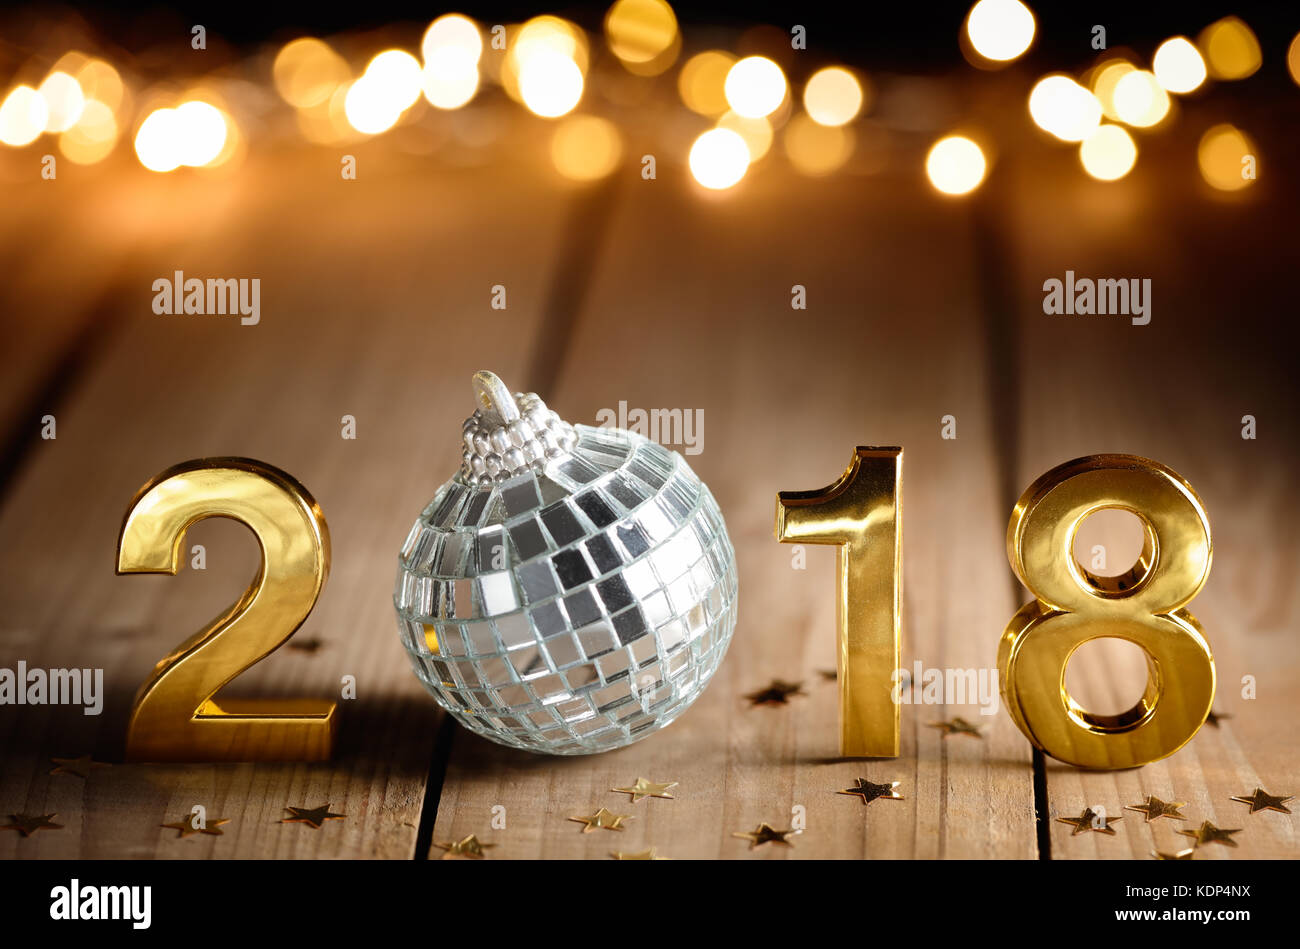 New year 2018 celebration,new year concept. Stock Photo